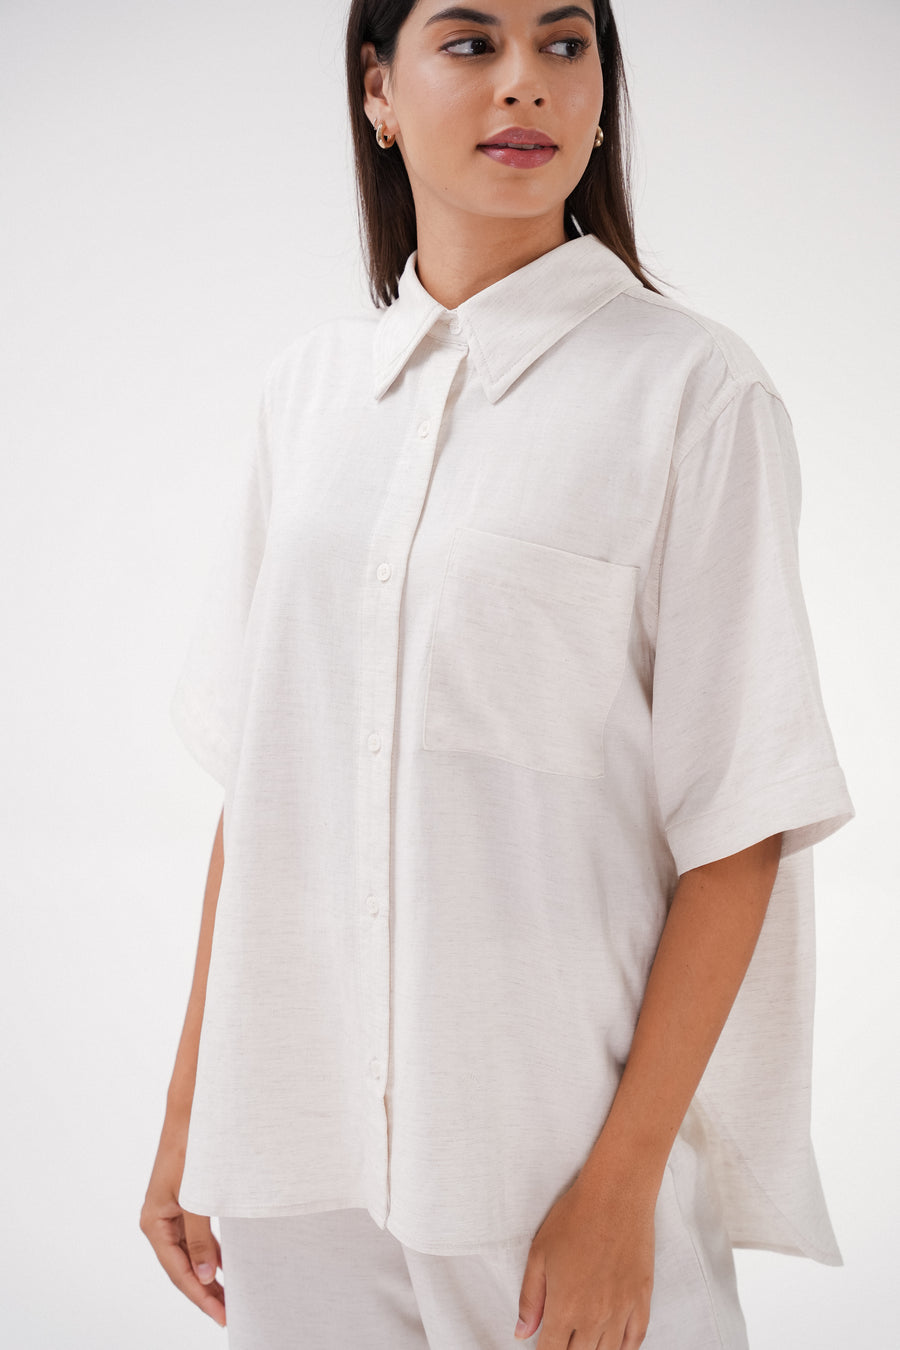 Editor Short Sleeve Shirt in Ivory